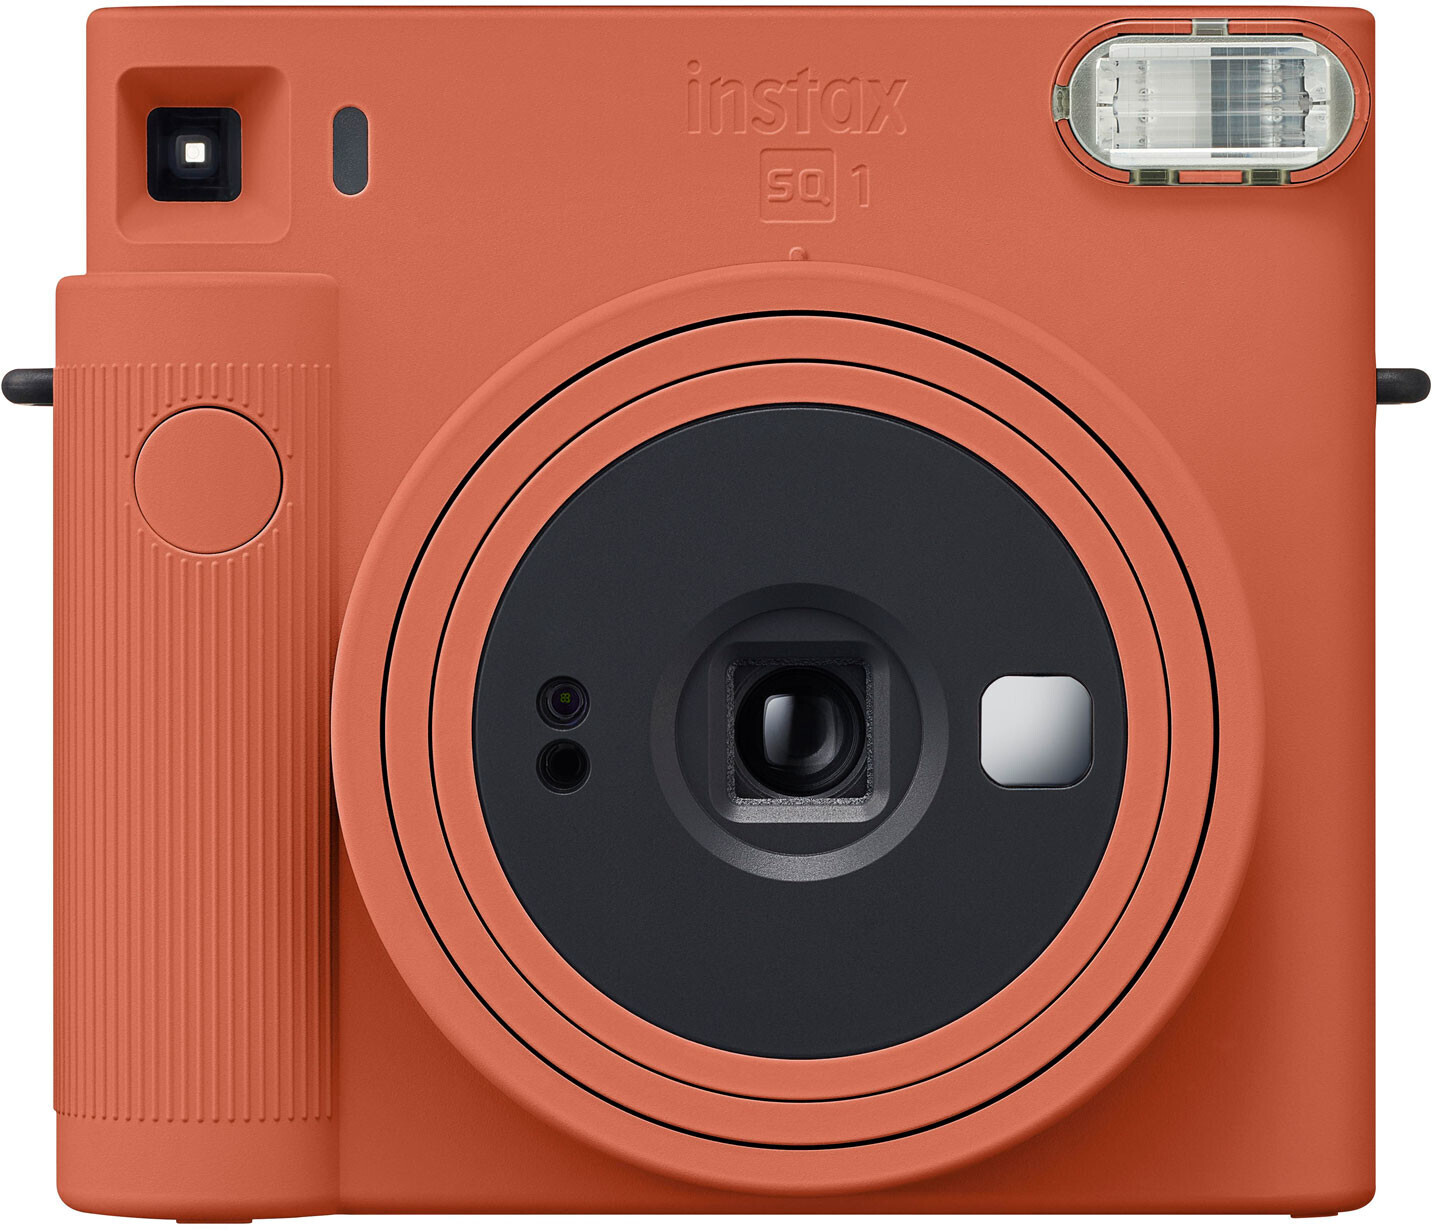 Image of Fotocamera istantanea Fuji instax SQ1 terracotta orange EX D colore arancione